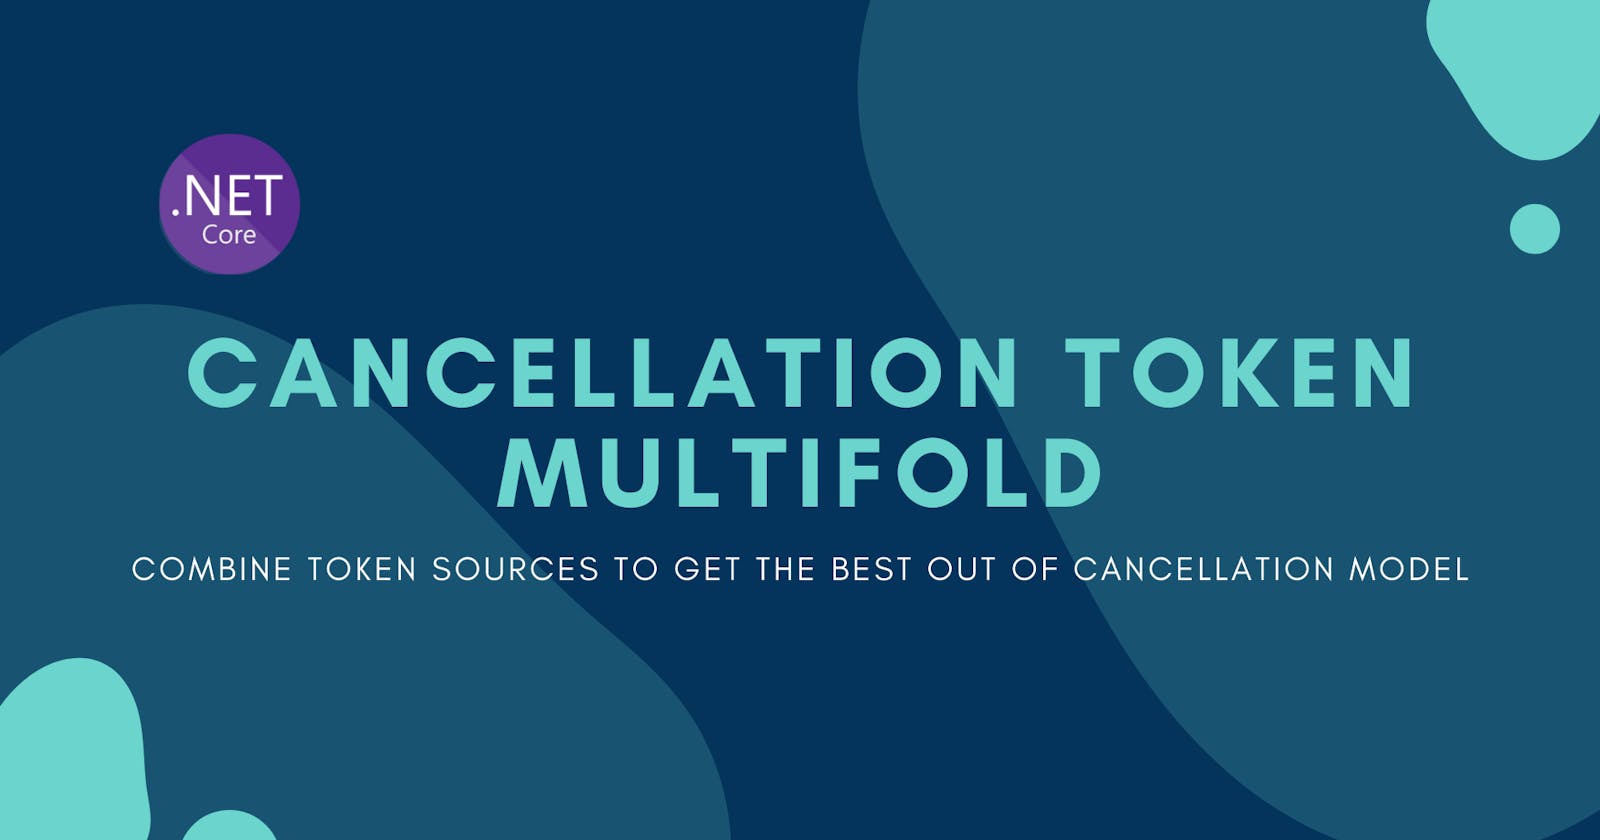 Cancellation token multifold